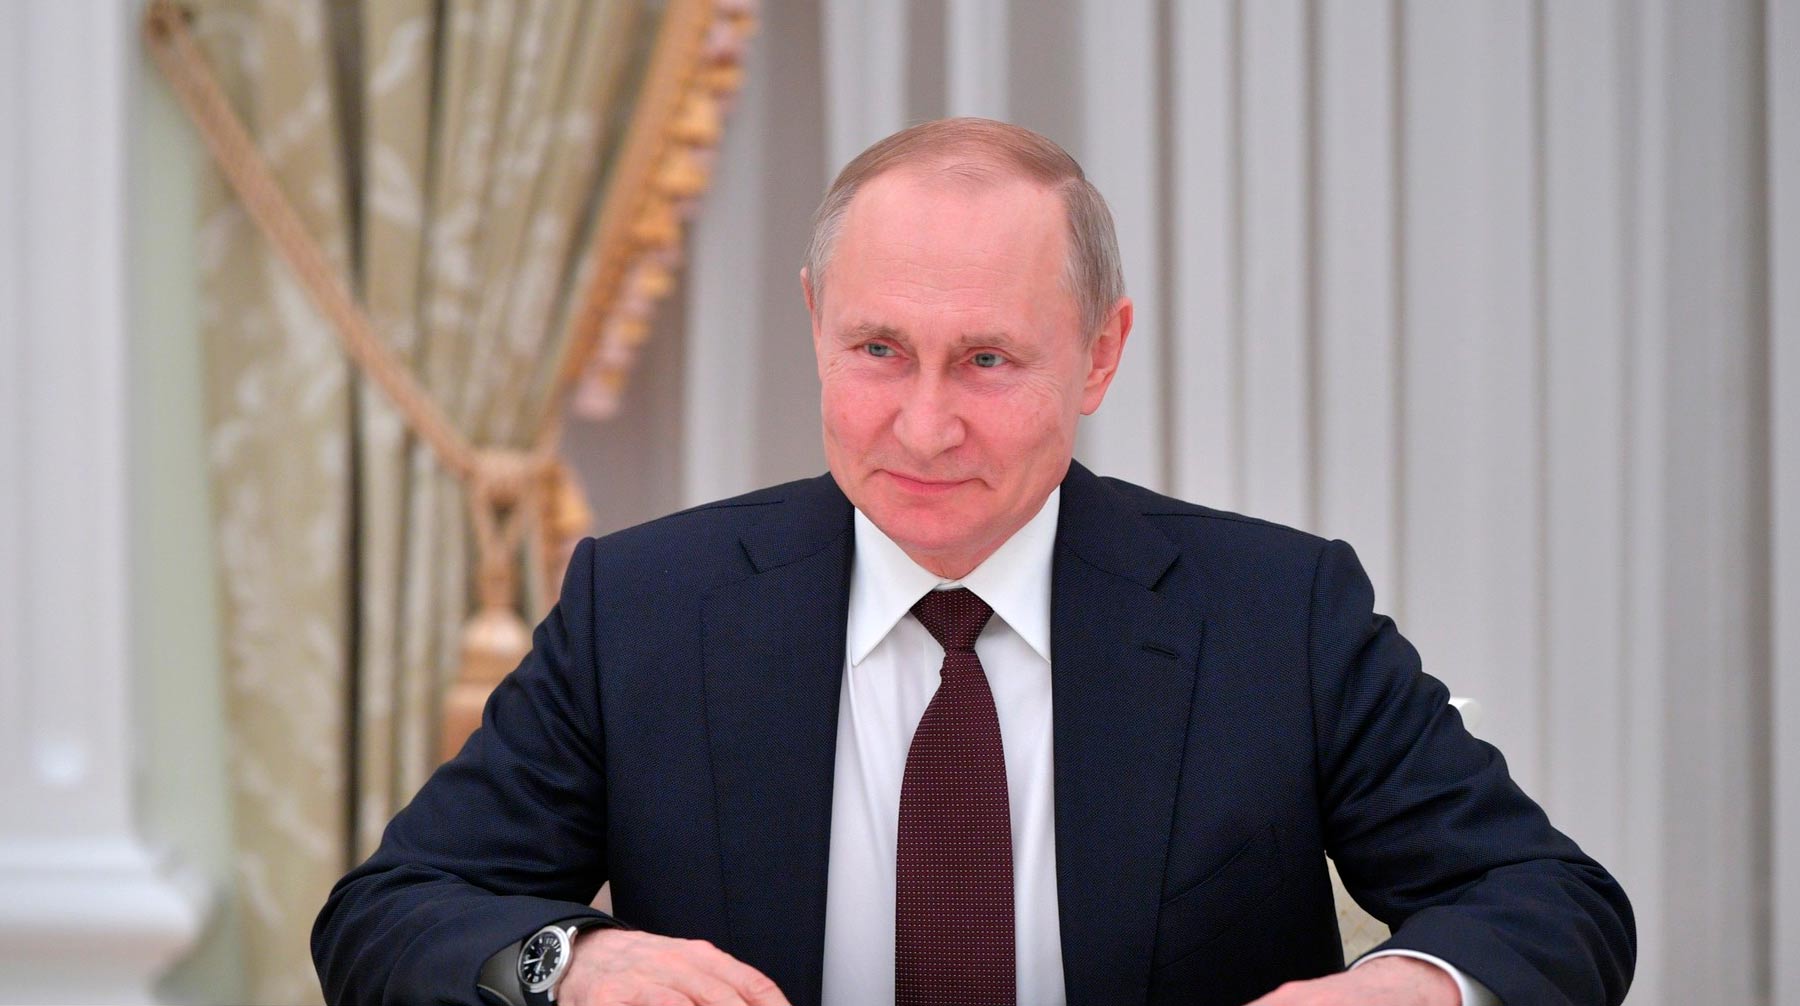 Глава государства также предложил перенести голосование по Конституции на более позднюю дату Фото: © Global Look Press / Kremlin Pool